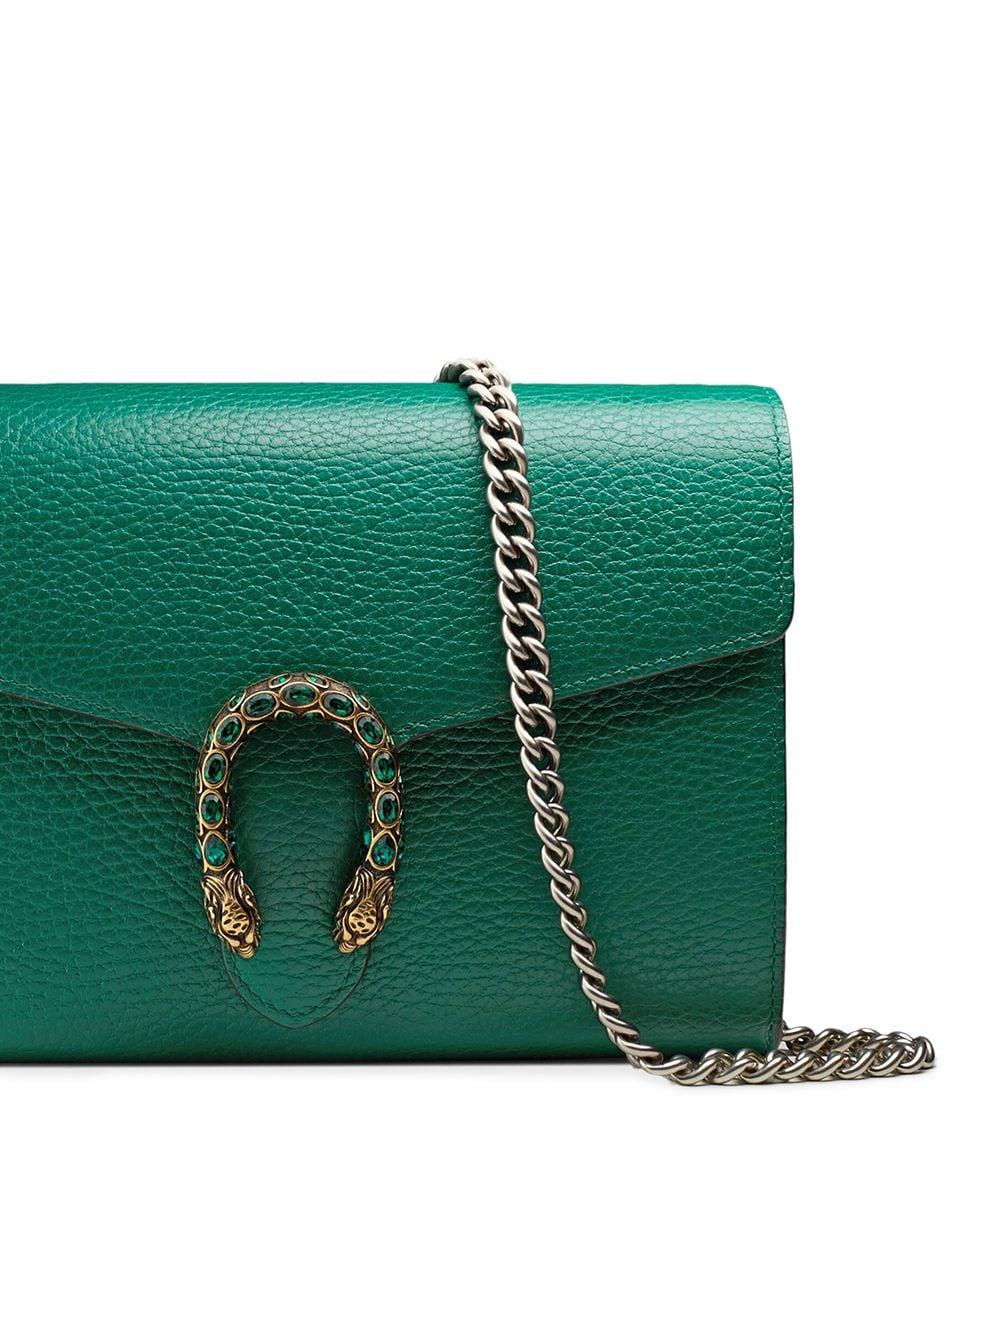 Gucci Dionysus Mini Shoulder Bag in Green | Lyst